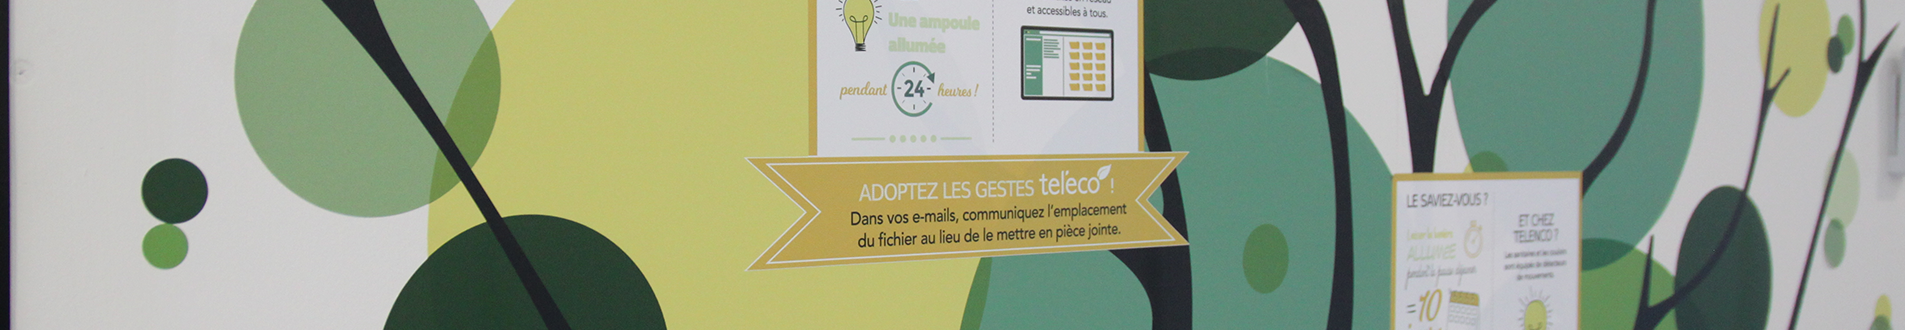 Telenco’s employees adopt Tel’Eco measures